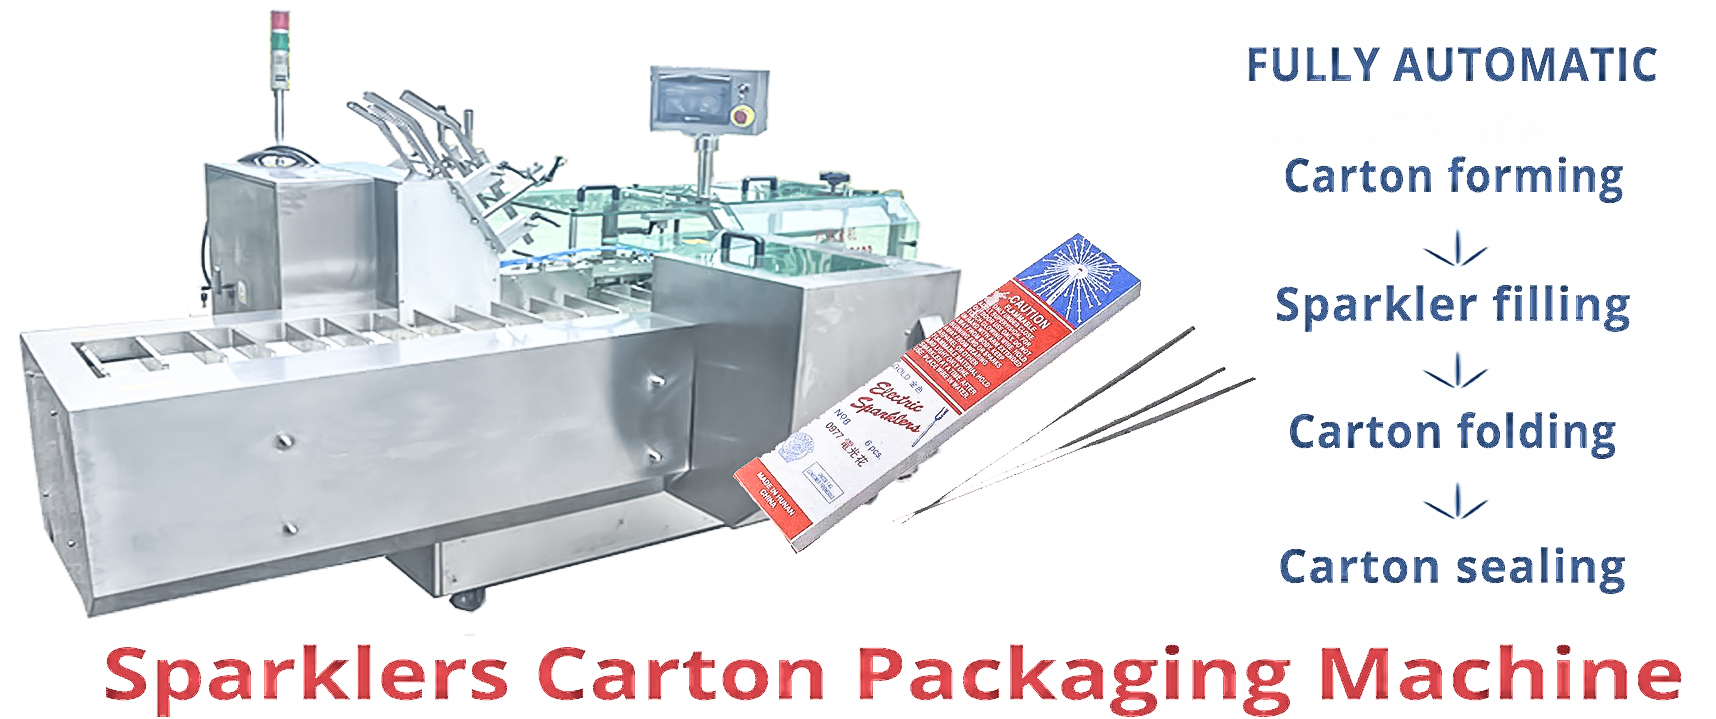 Sparklers Carton Packaging Machine